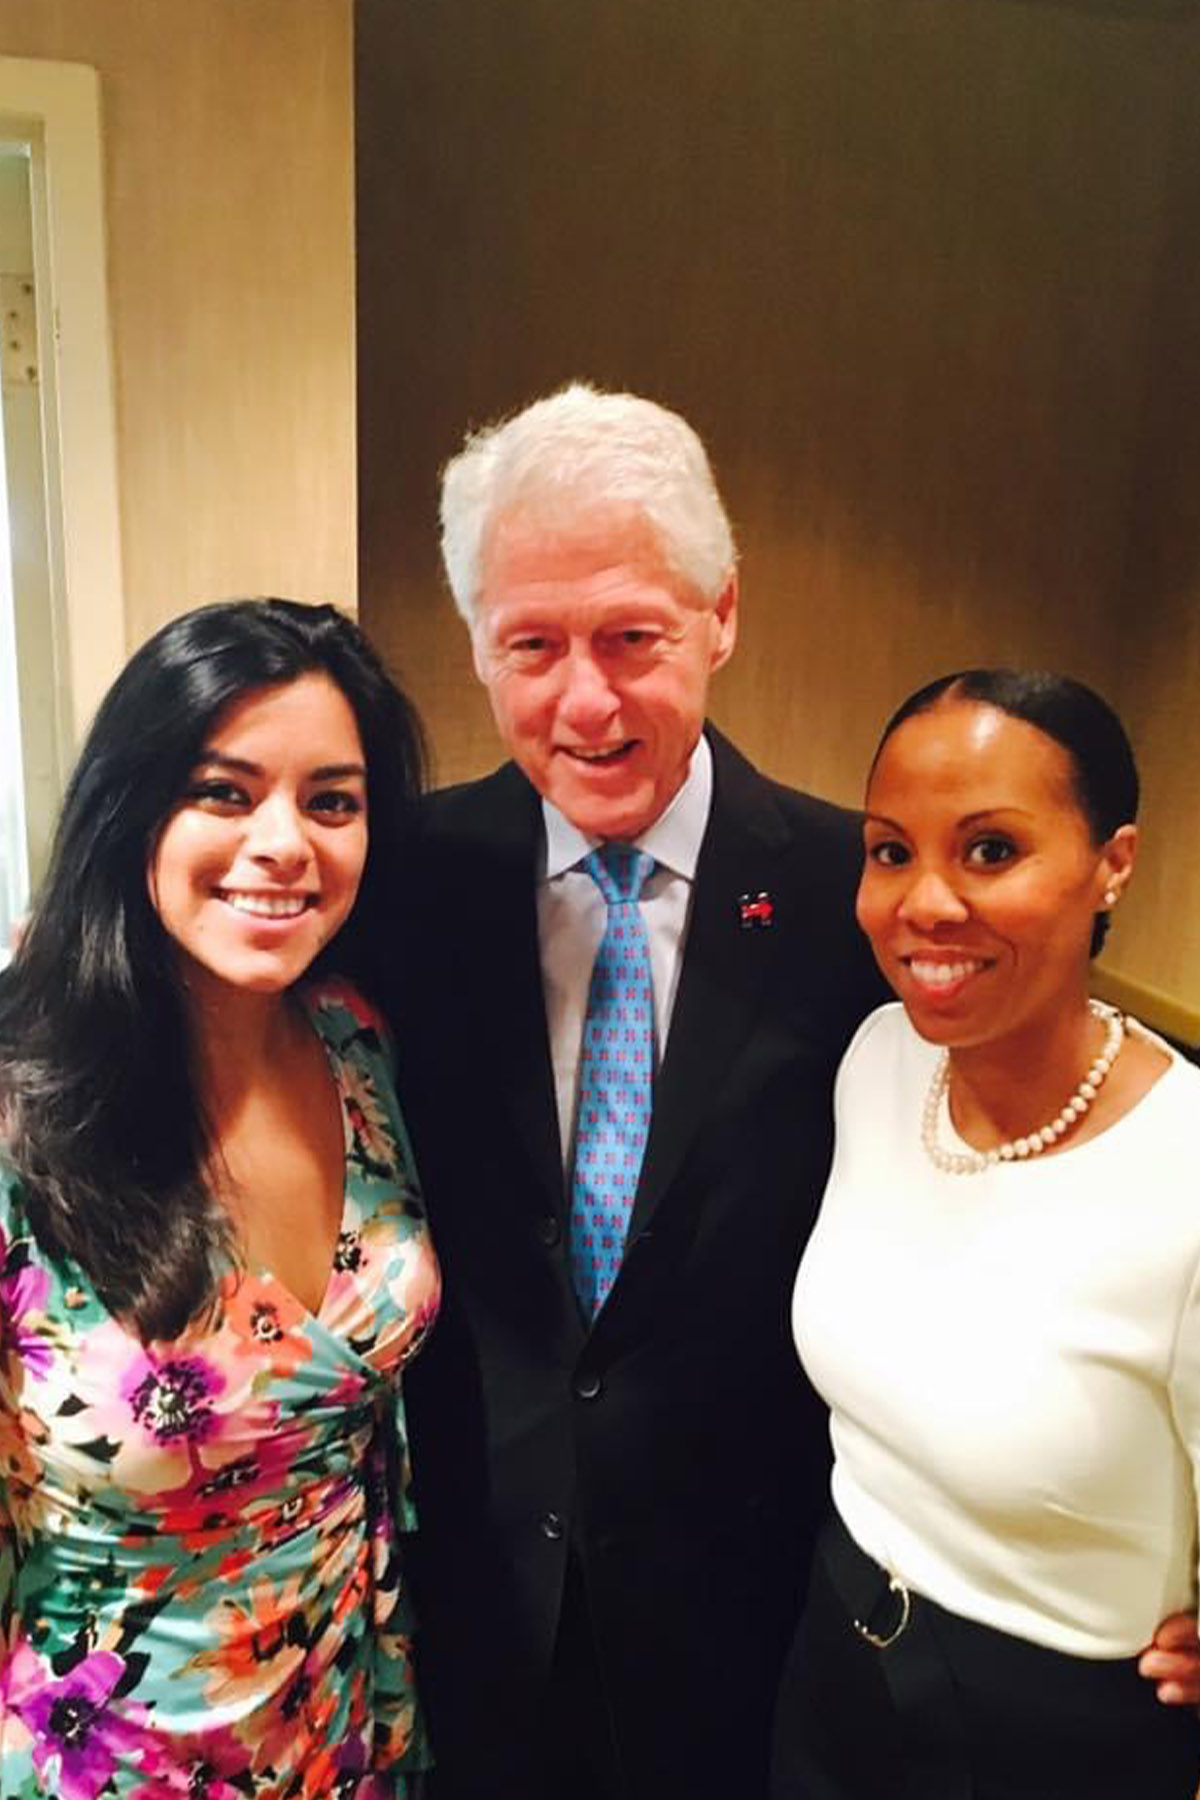 Rebecca Acuña with former President Bill Clinton